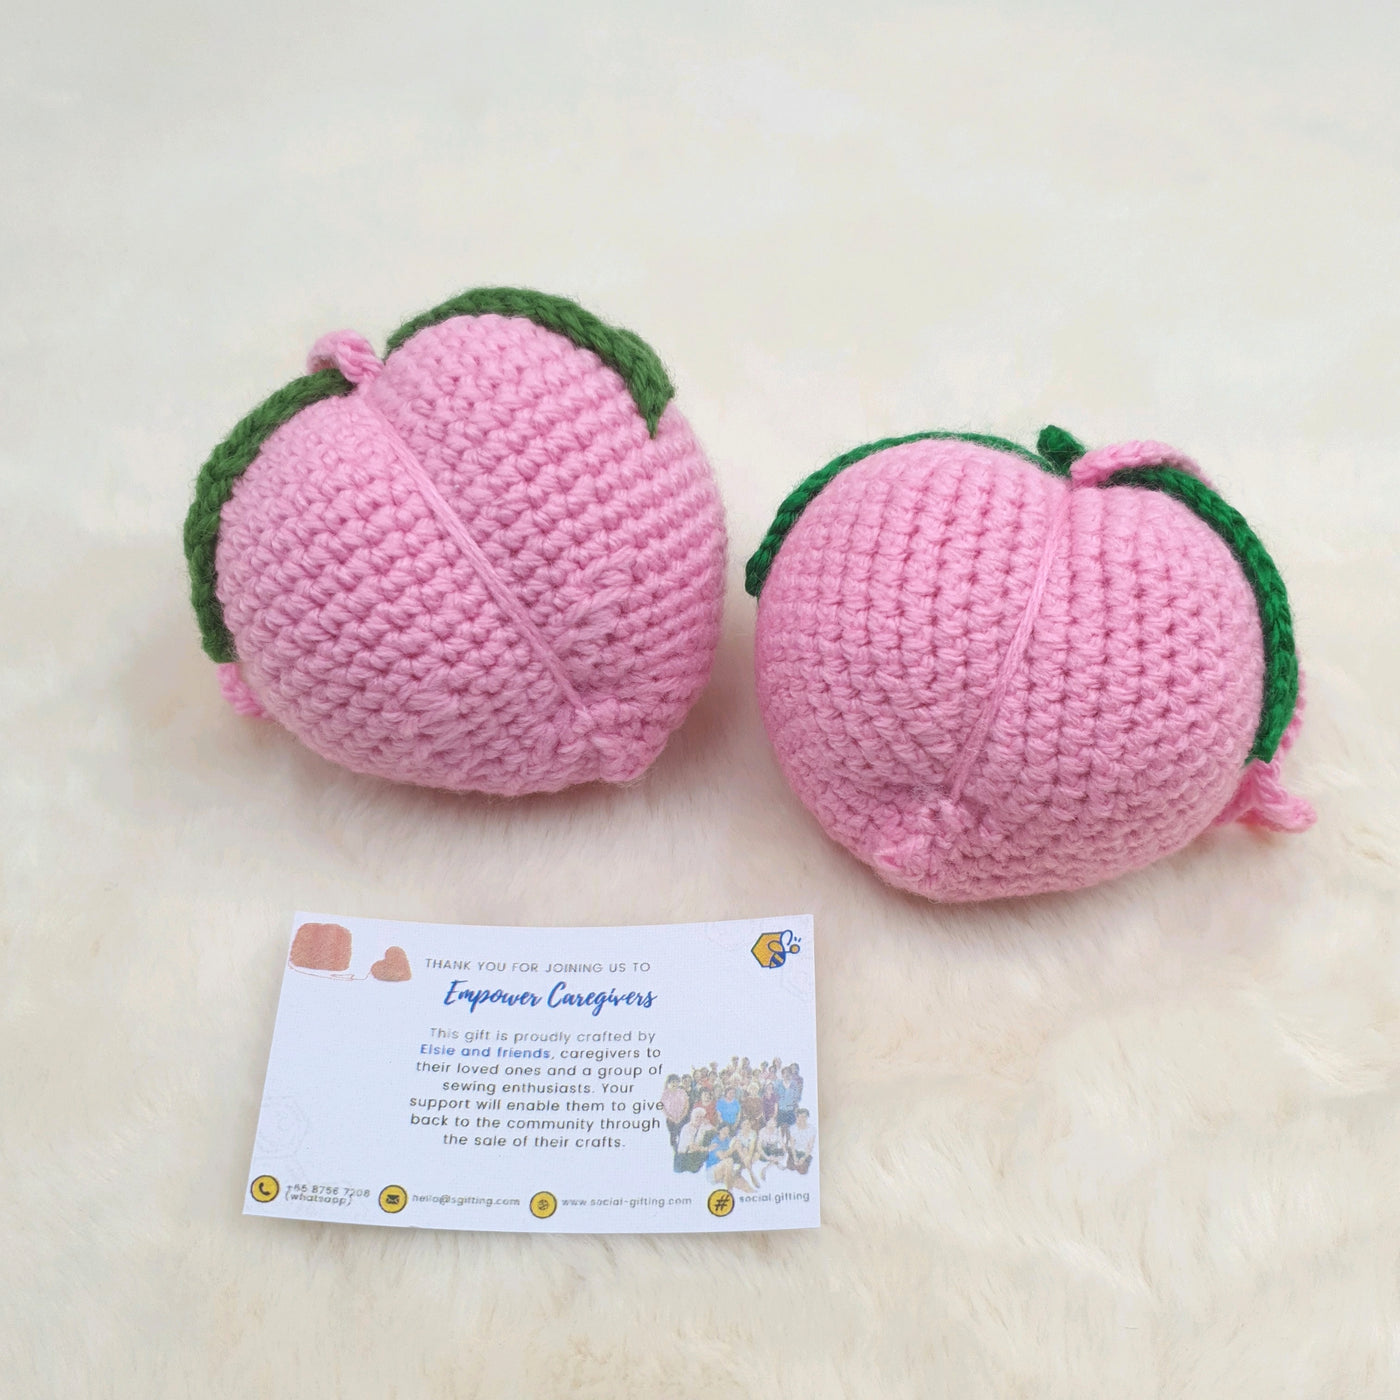 Hand Crocheted Peach Stress ball